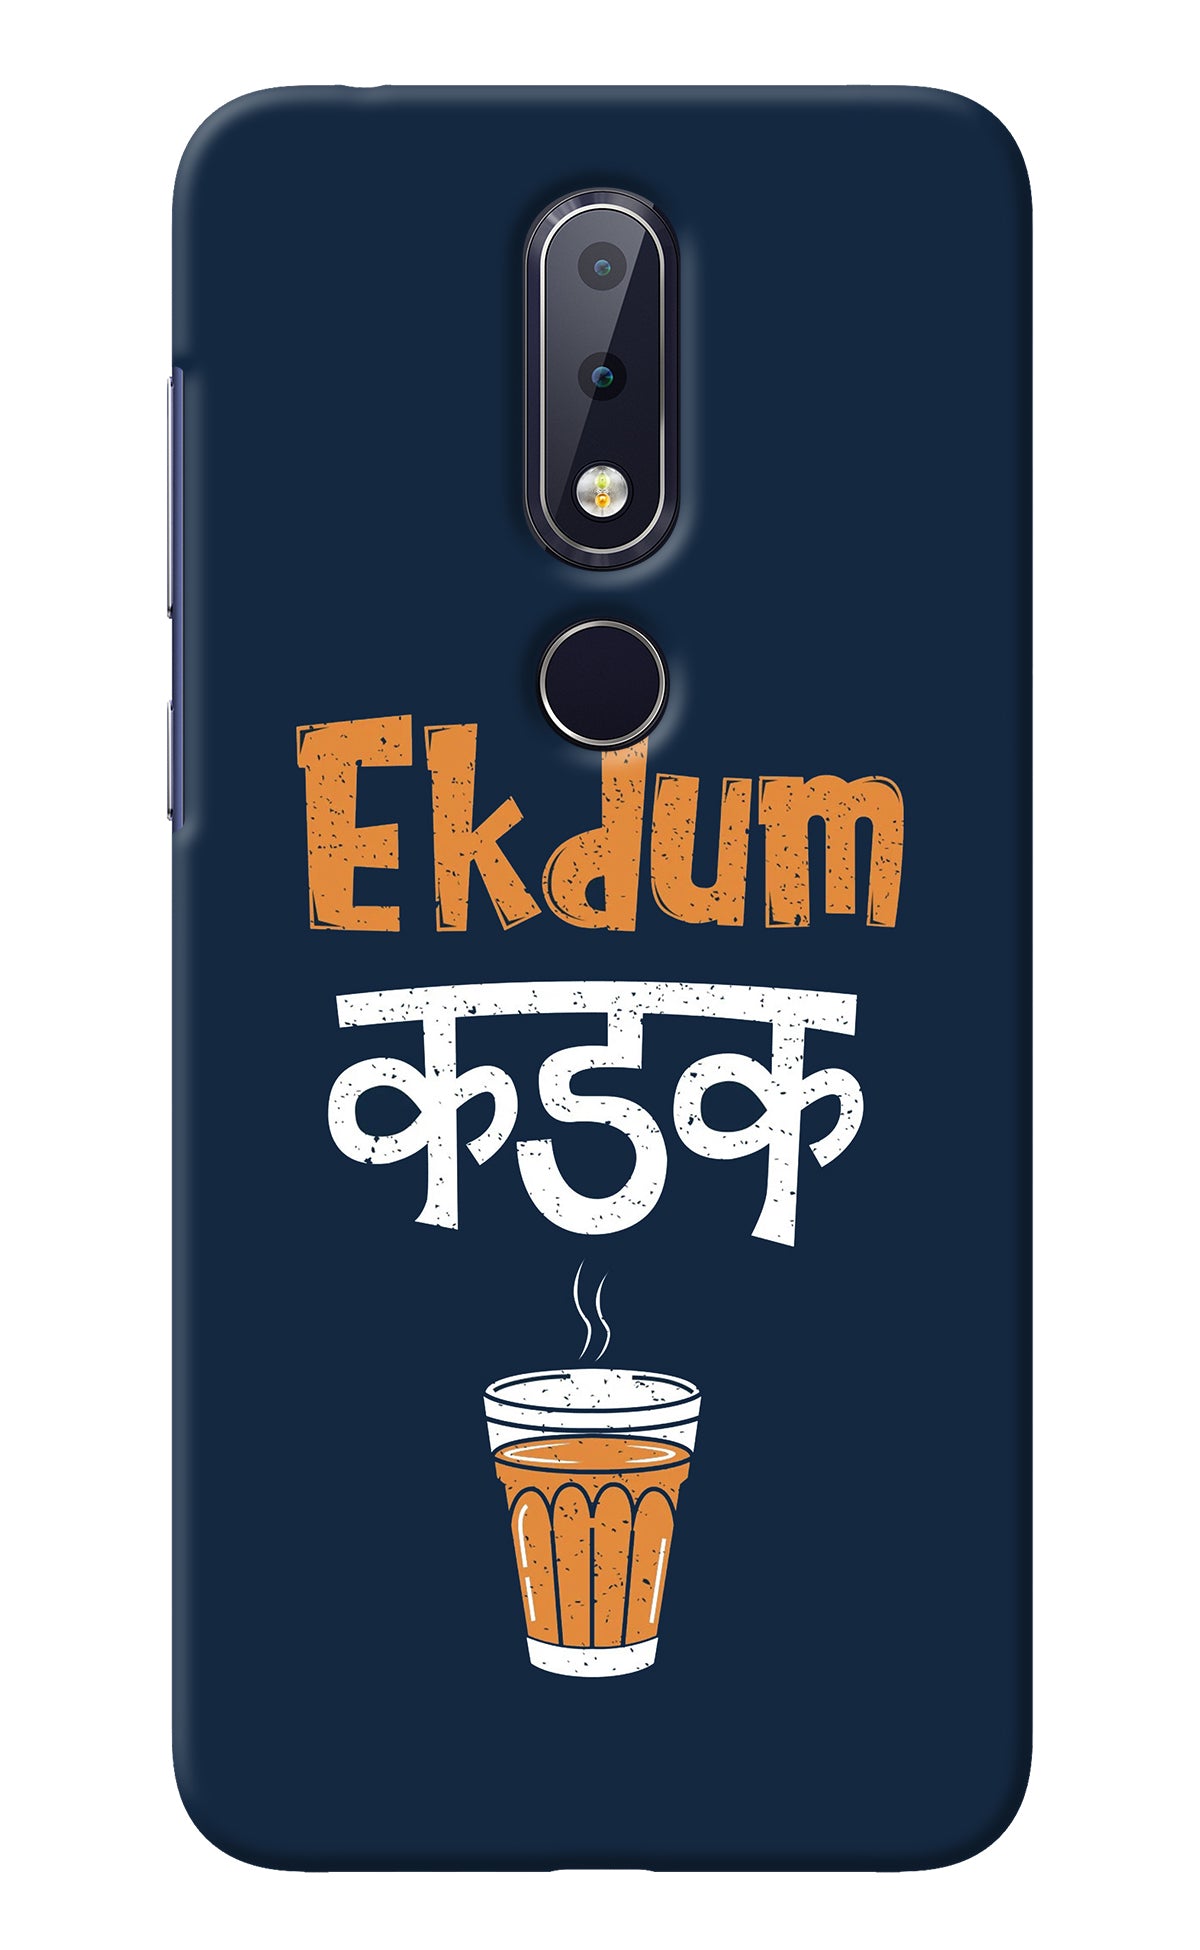 Ekdum Kadak Chai Nokia 6.1 plus Back Cover